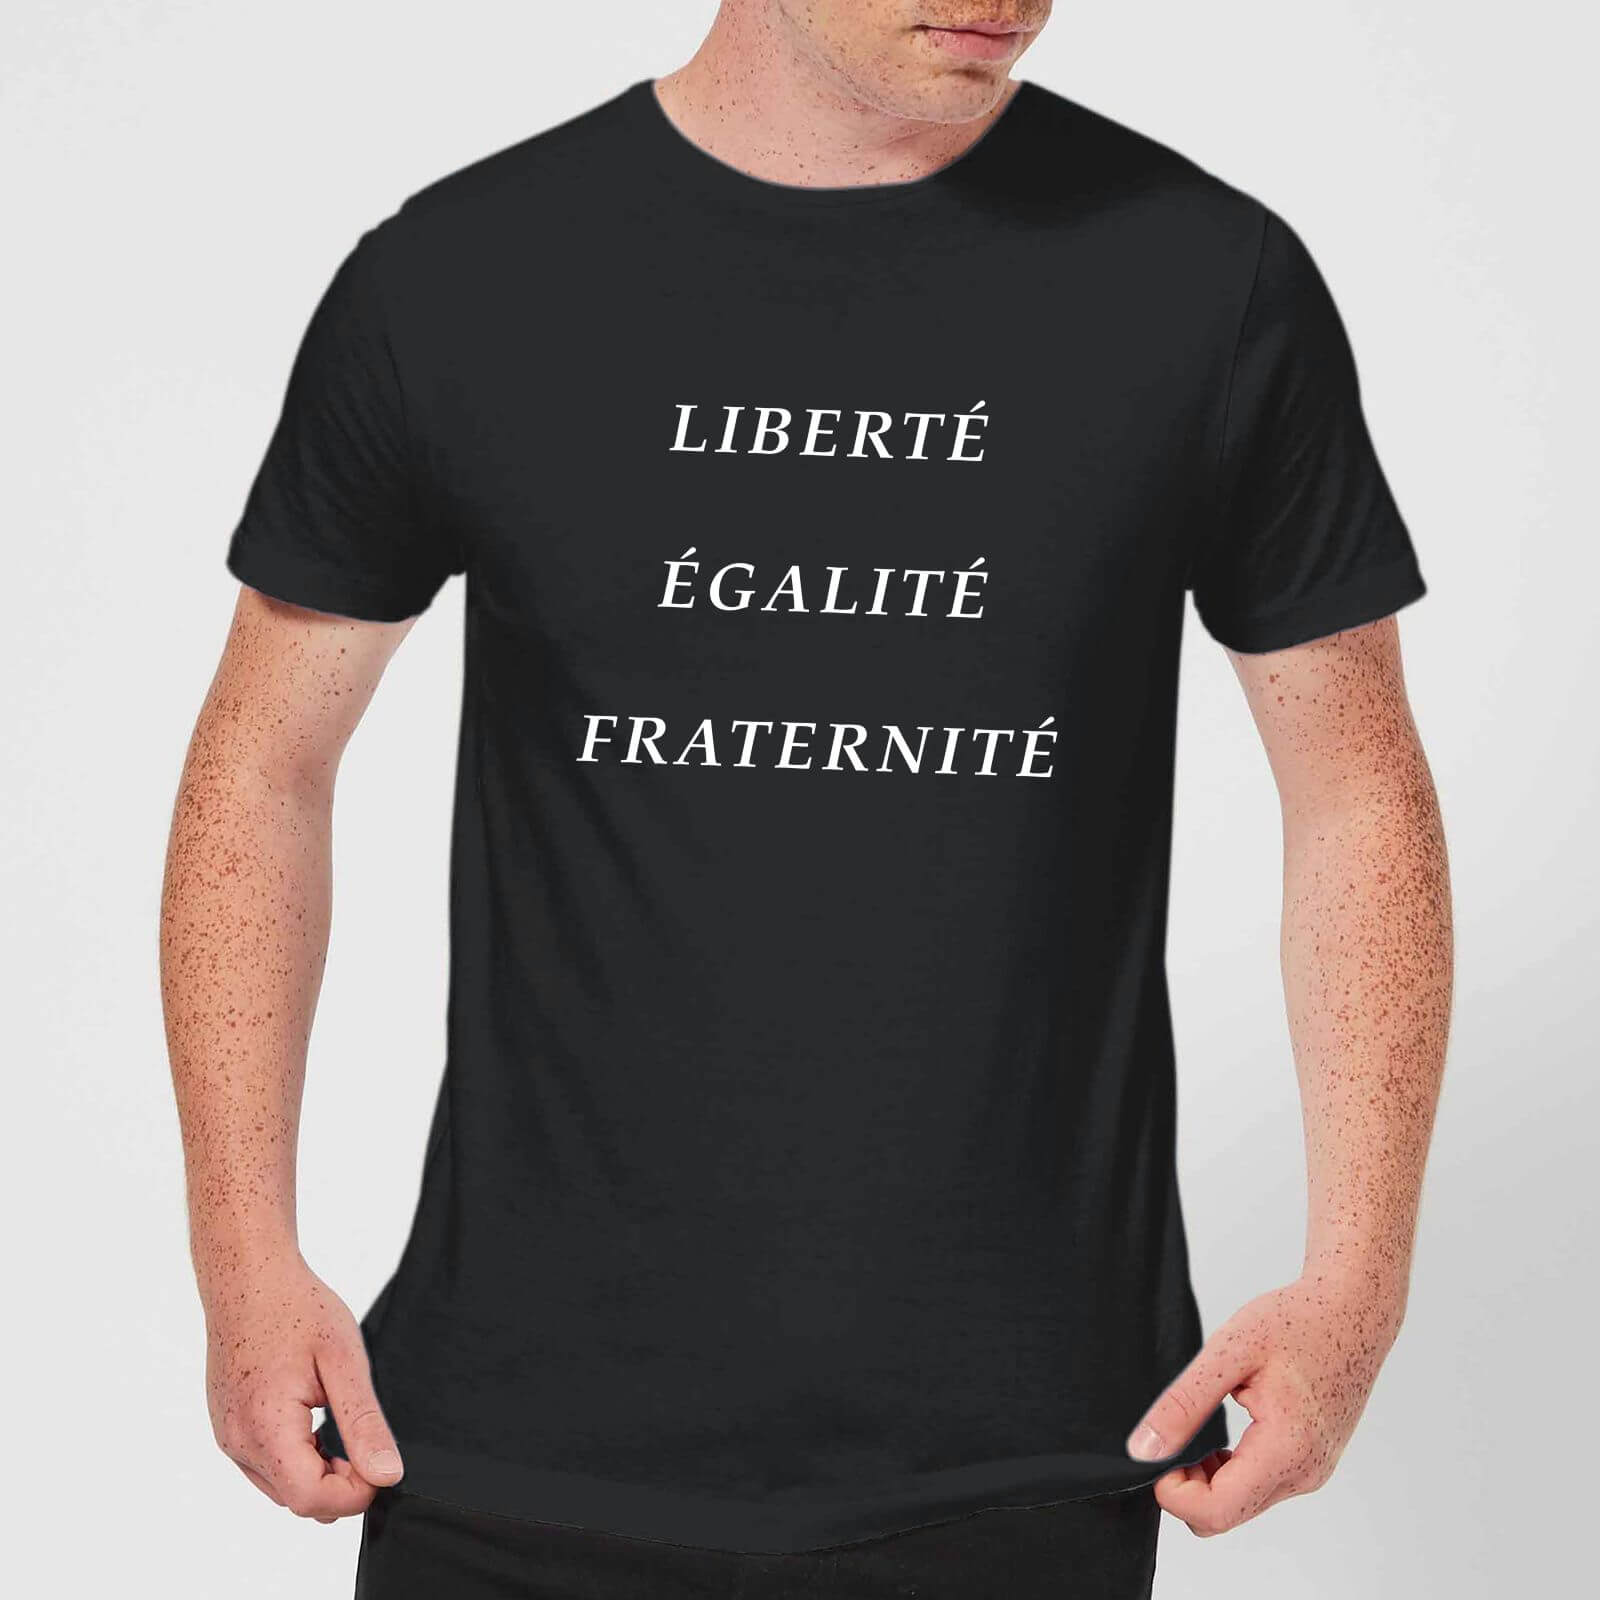 Liberte Egalite Fraternite T-Shirt - Black - M - Black